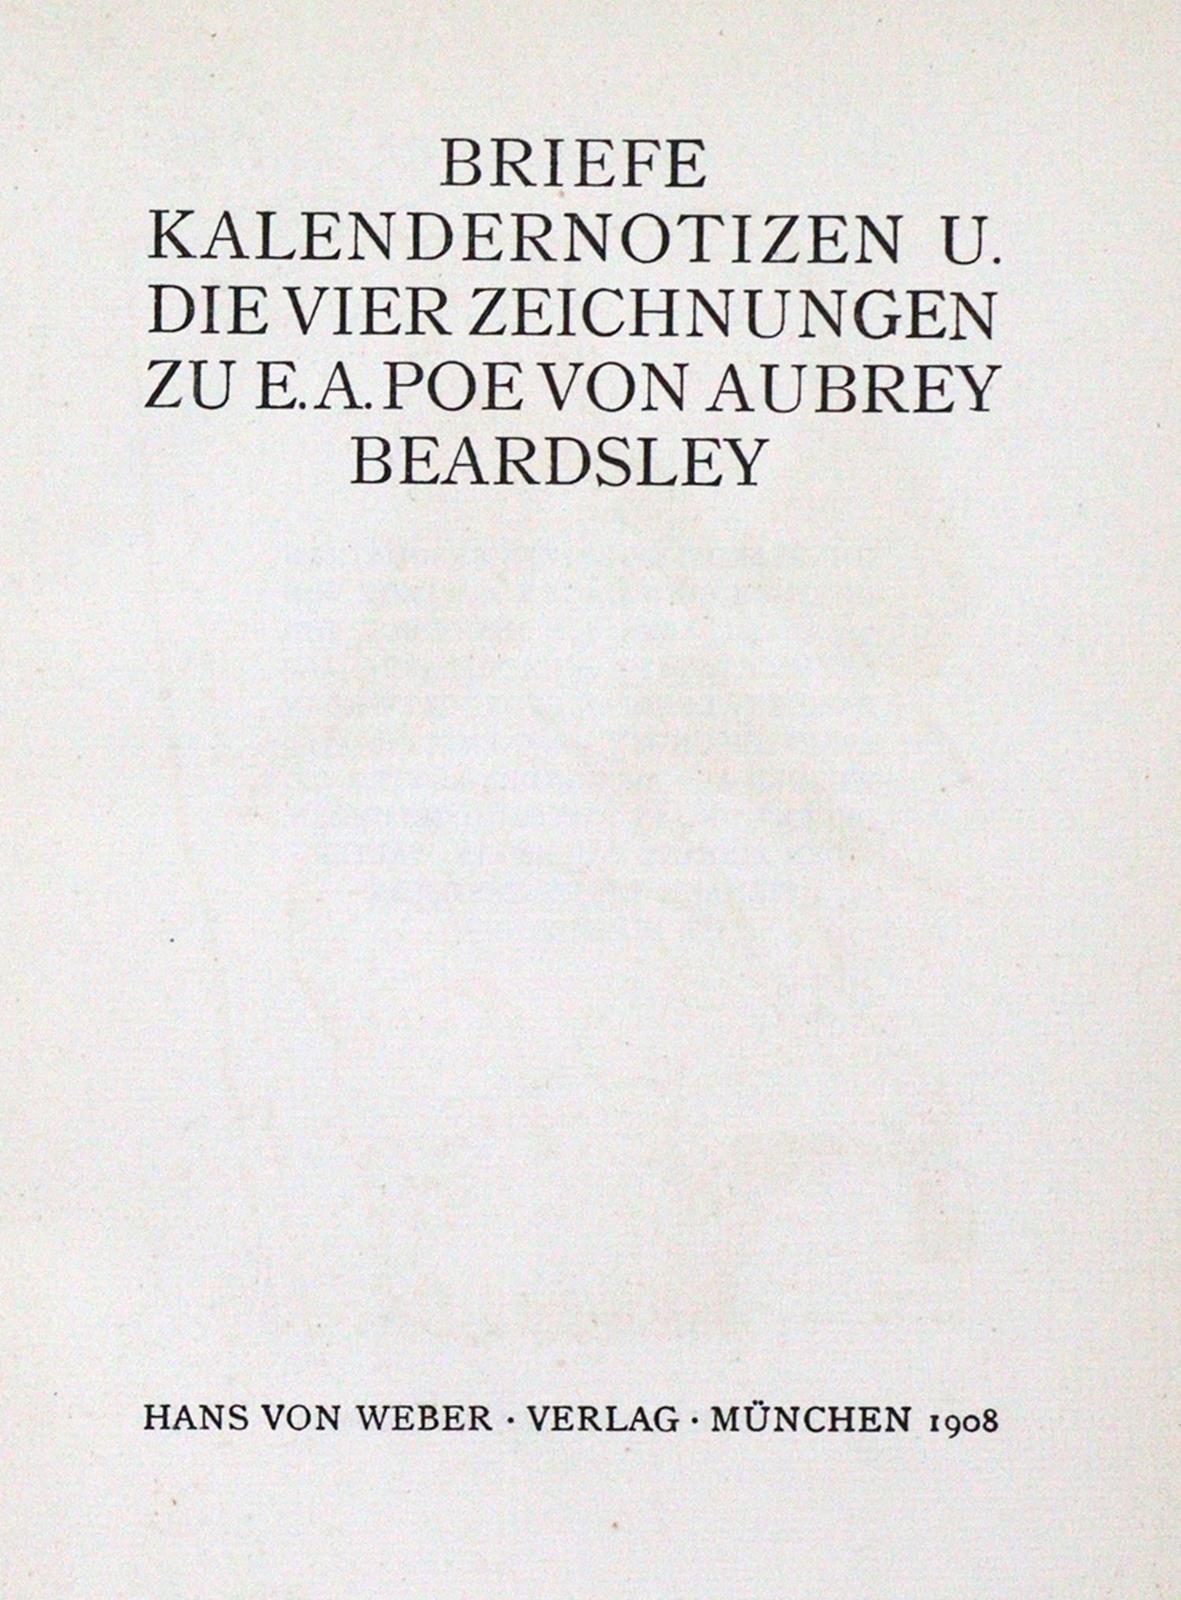 Beardsley,A. 信件、日历说明和关于E.A. Poe的四幅画。Mchn., Hans von Weber 1908. 有5张图，4页，186页，1叶。&hellip;